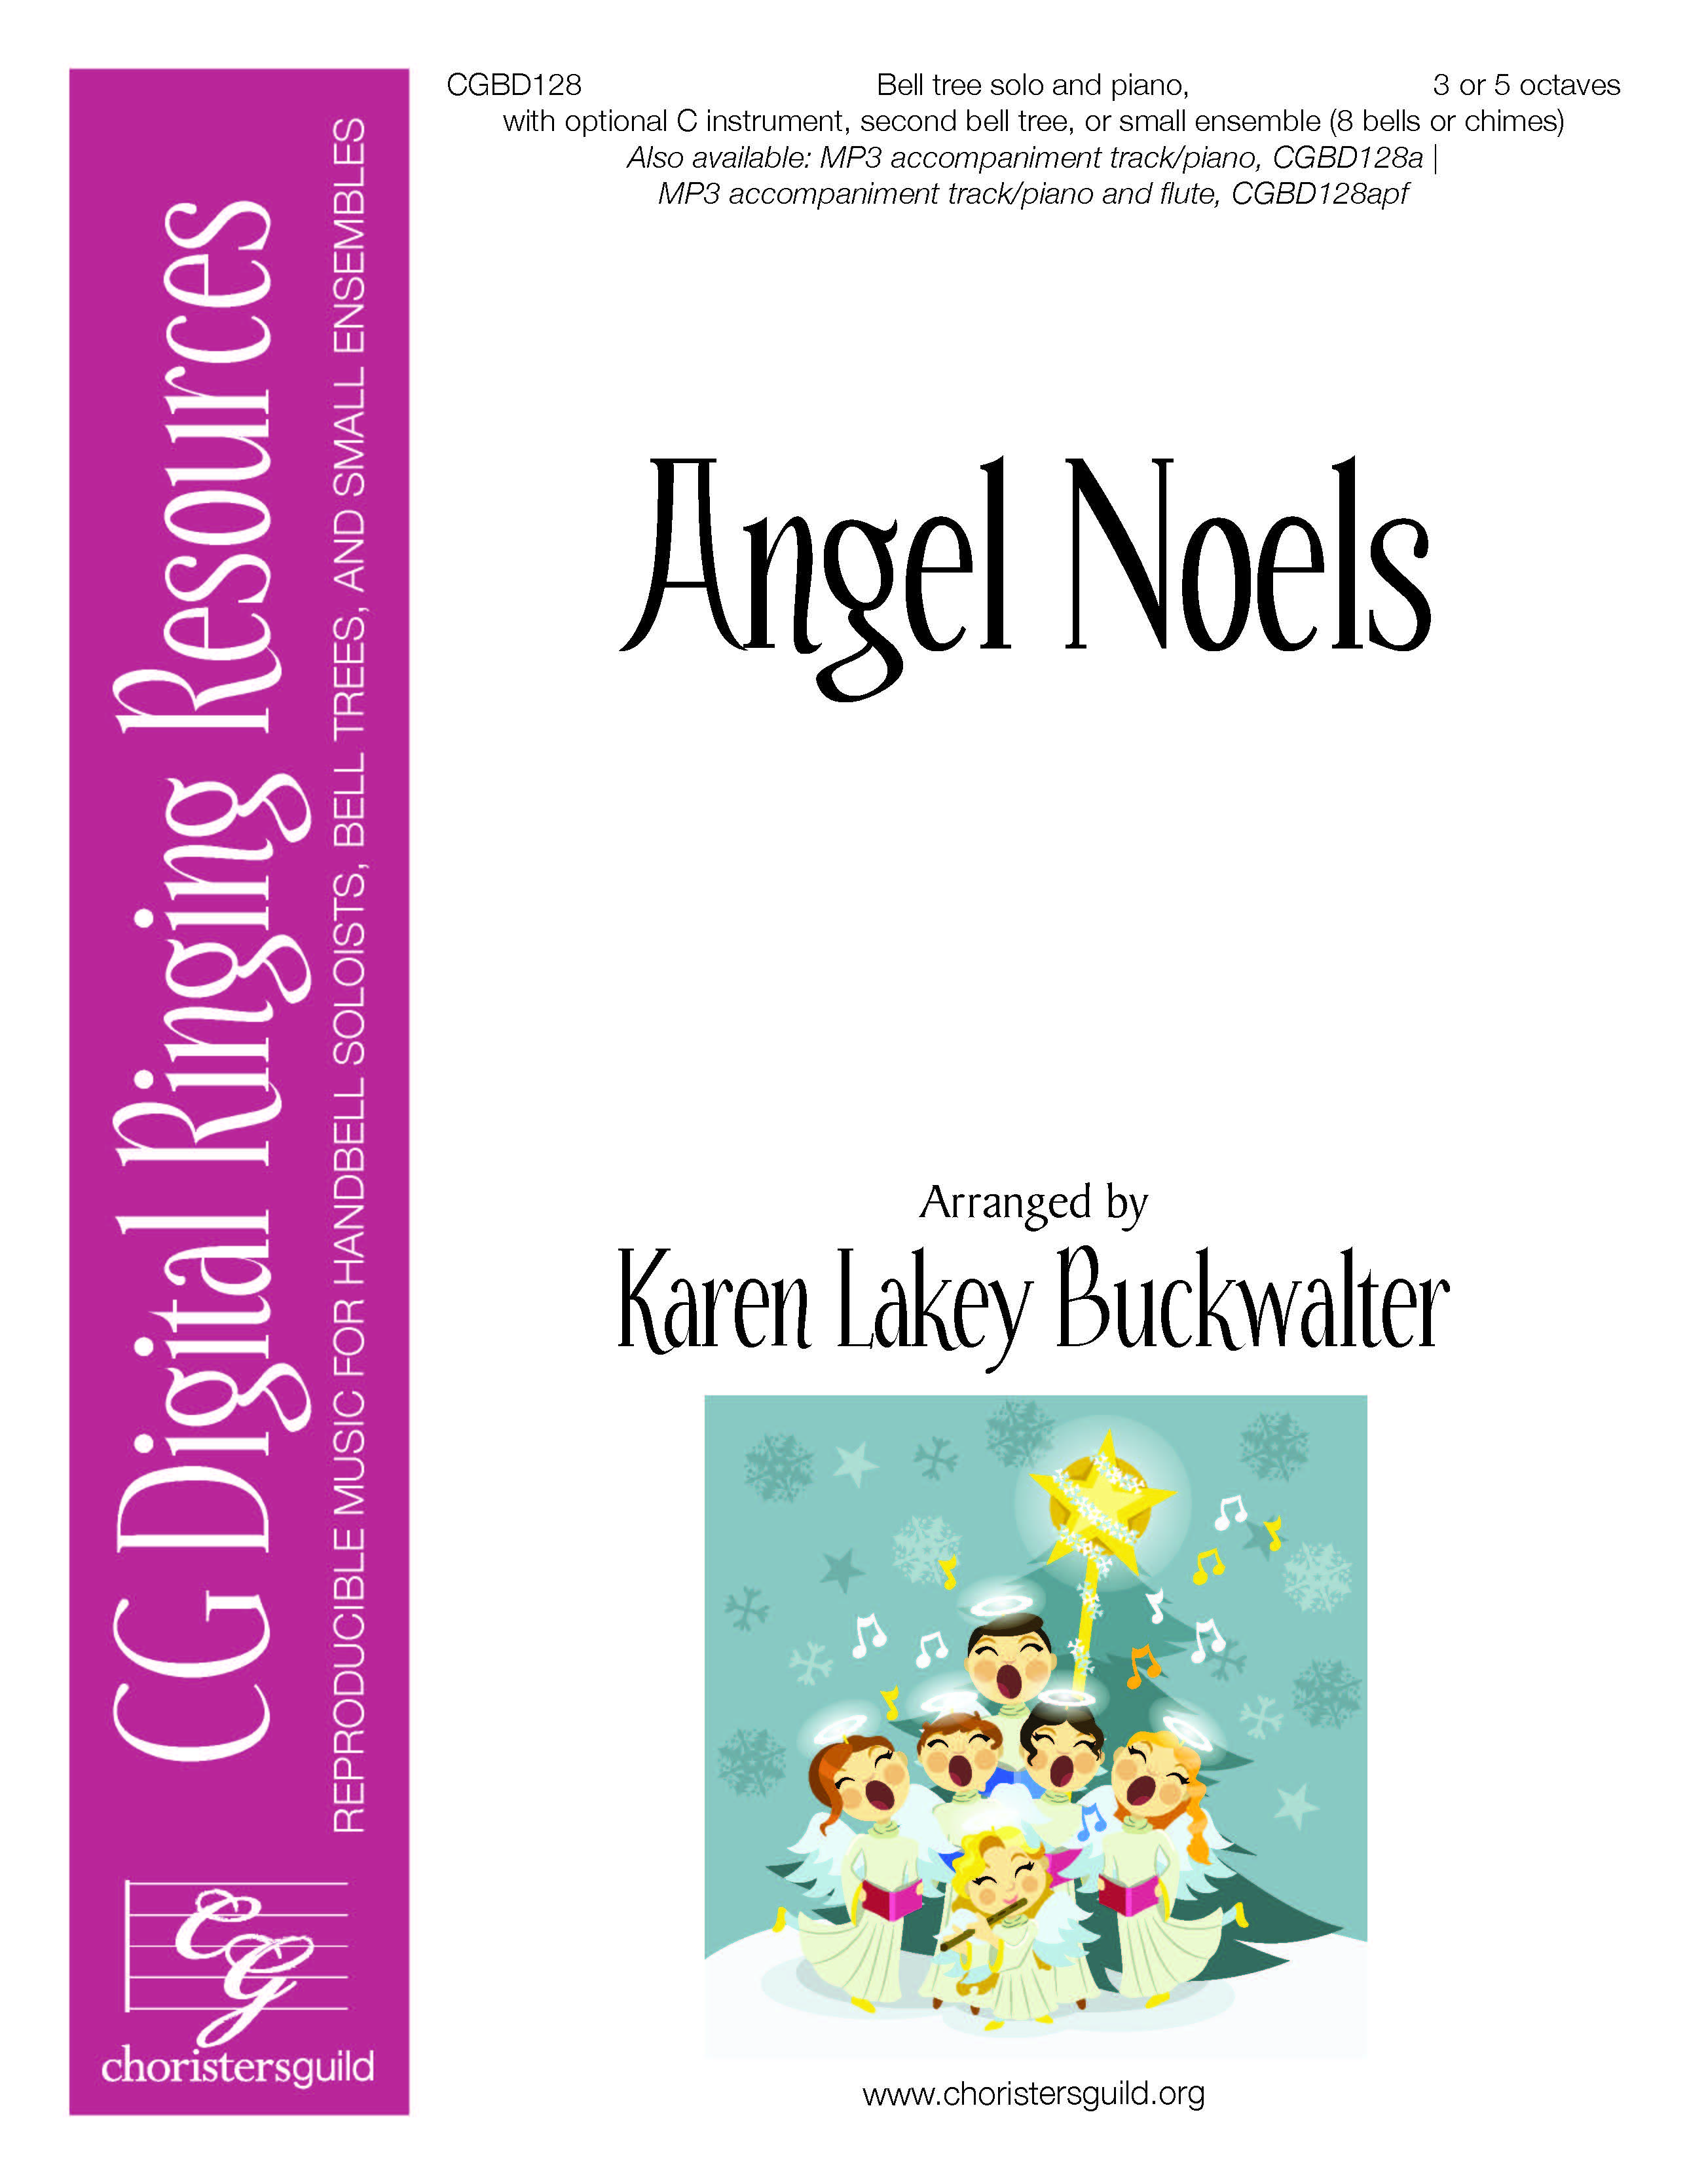 Angels Noel - Digital Accompaniment Track (piano and flute)